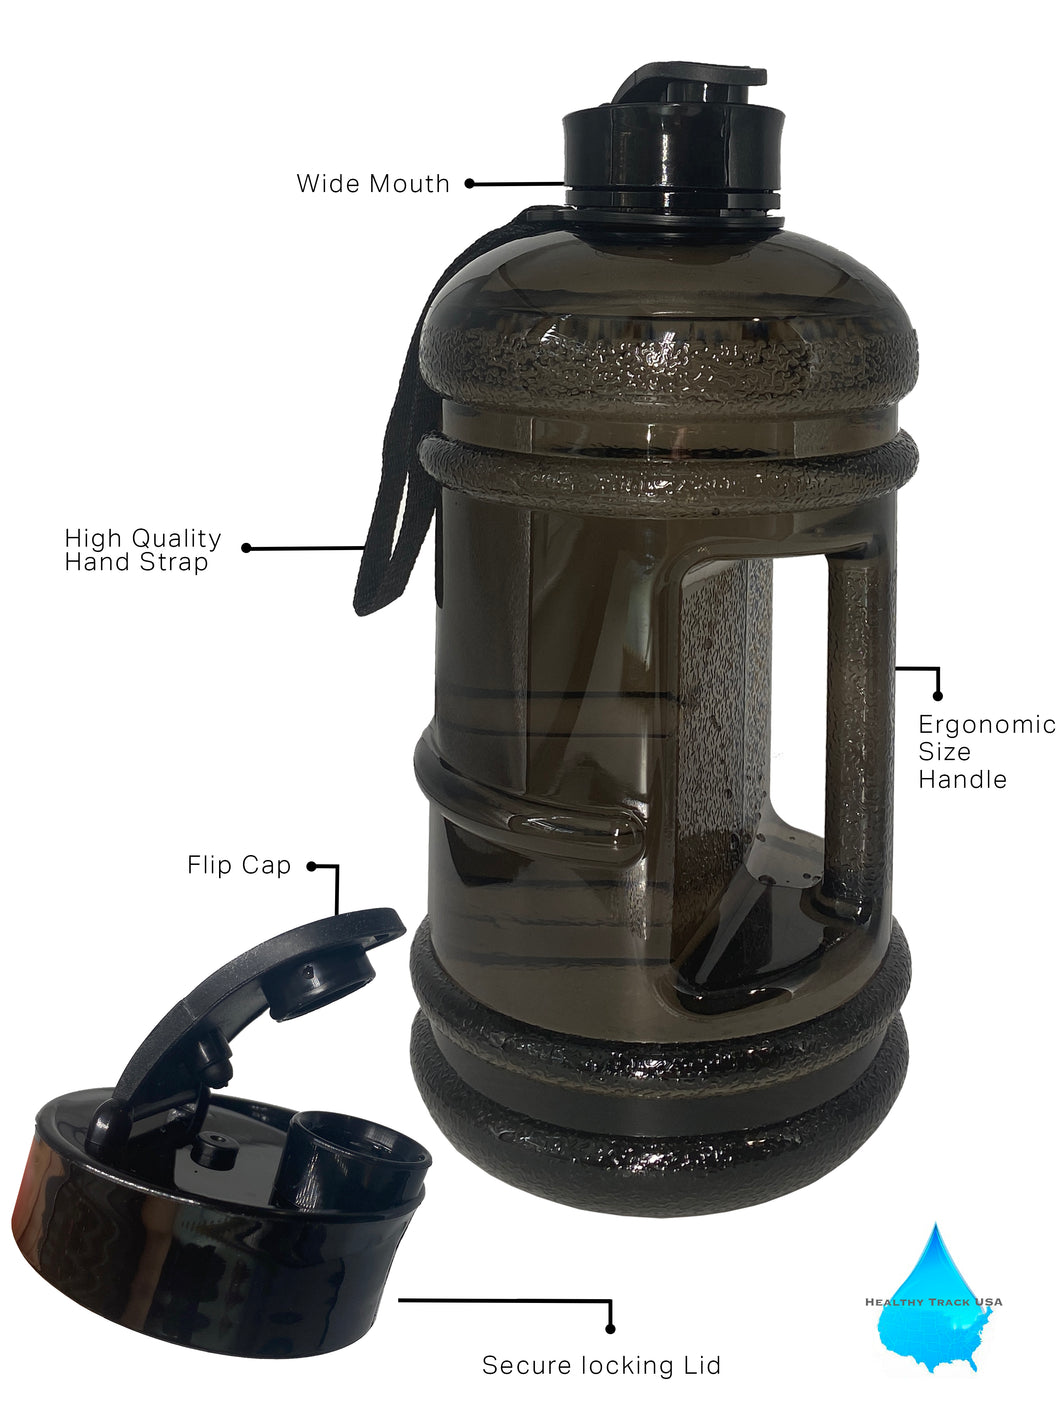 75 Oz - 2.2L Big Capacity Water Drinking Bottle BPA Free. Portable Gym Sports Outdoor Bottles